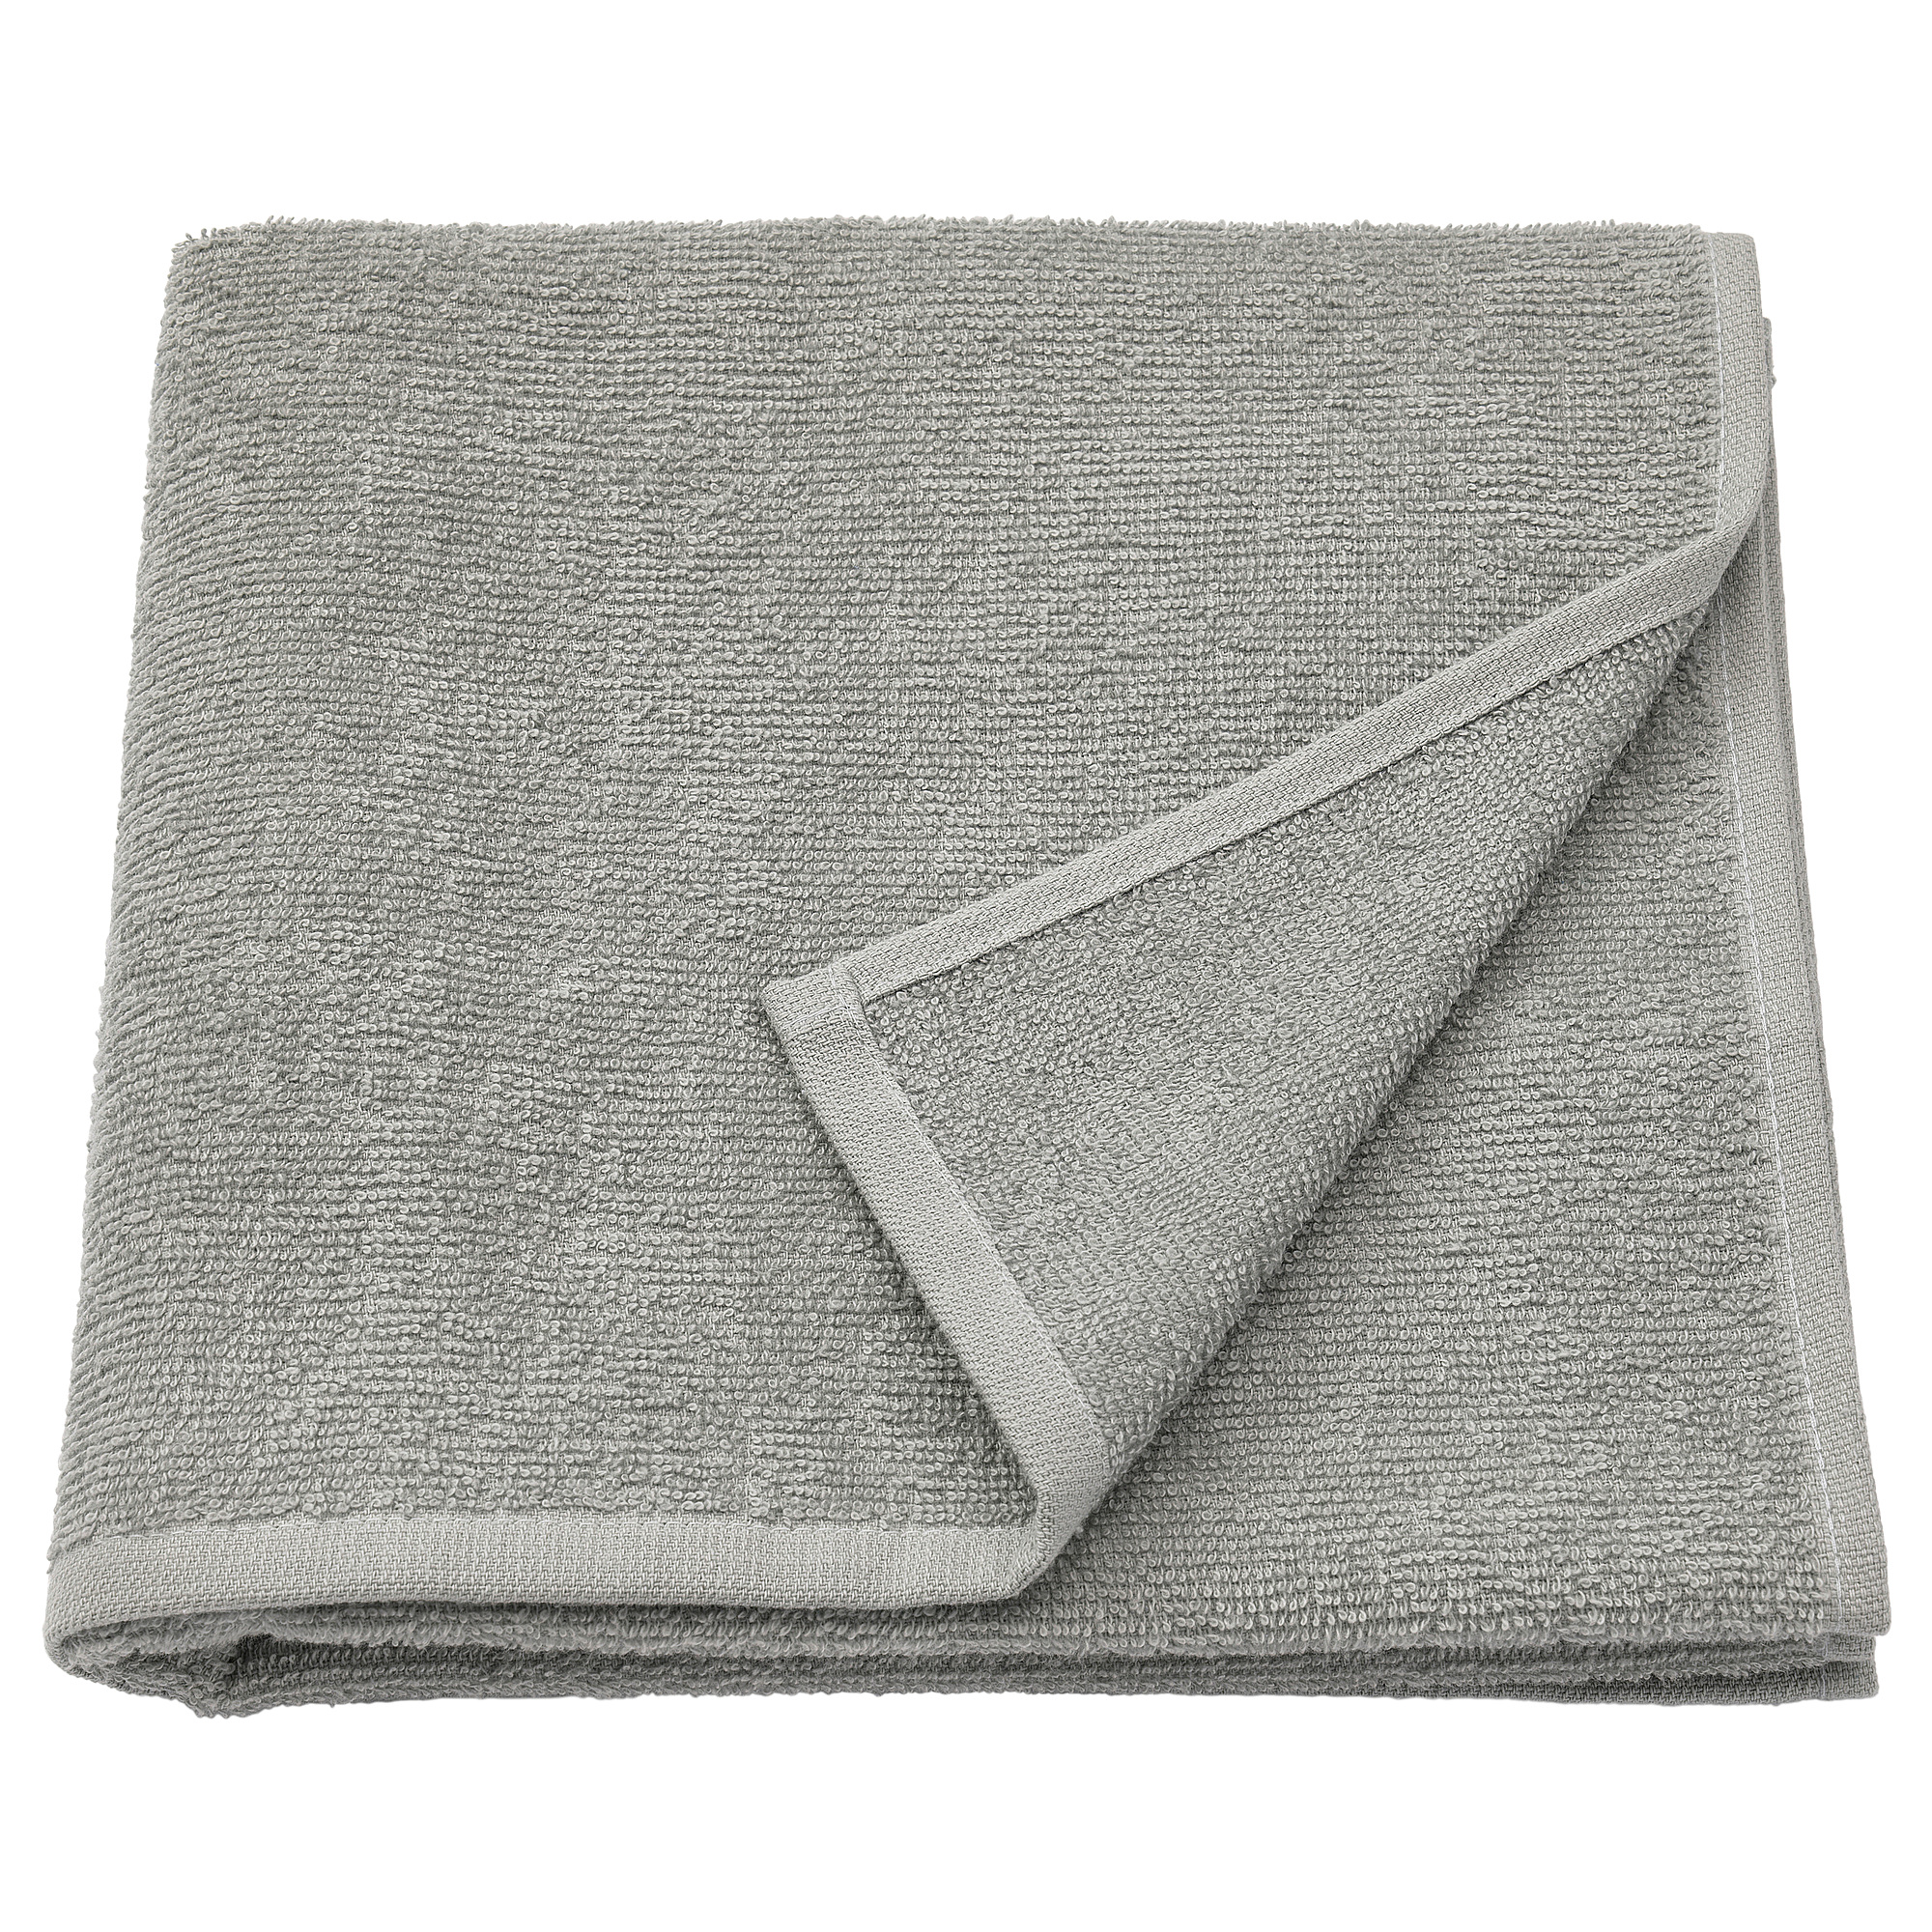 LUDDVIAL bath towel